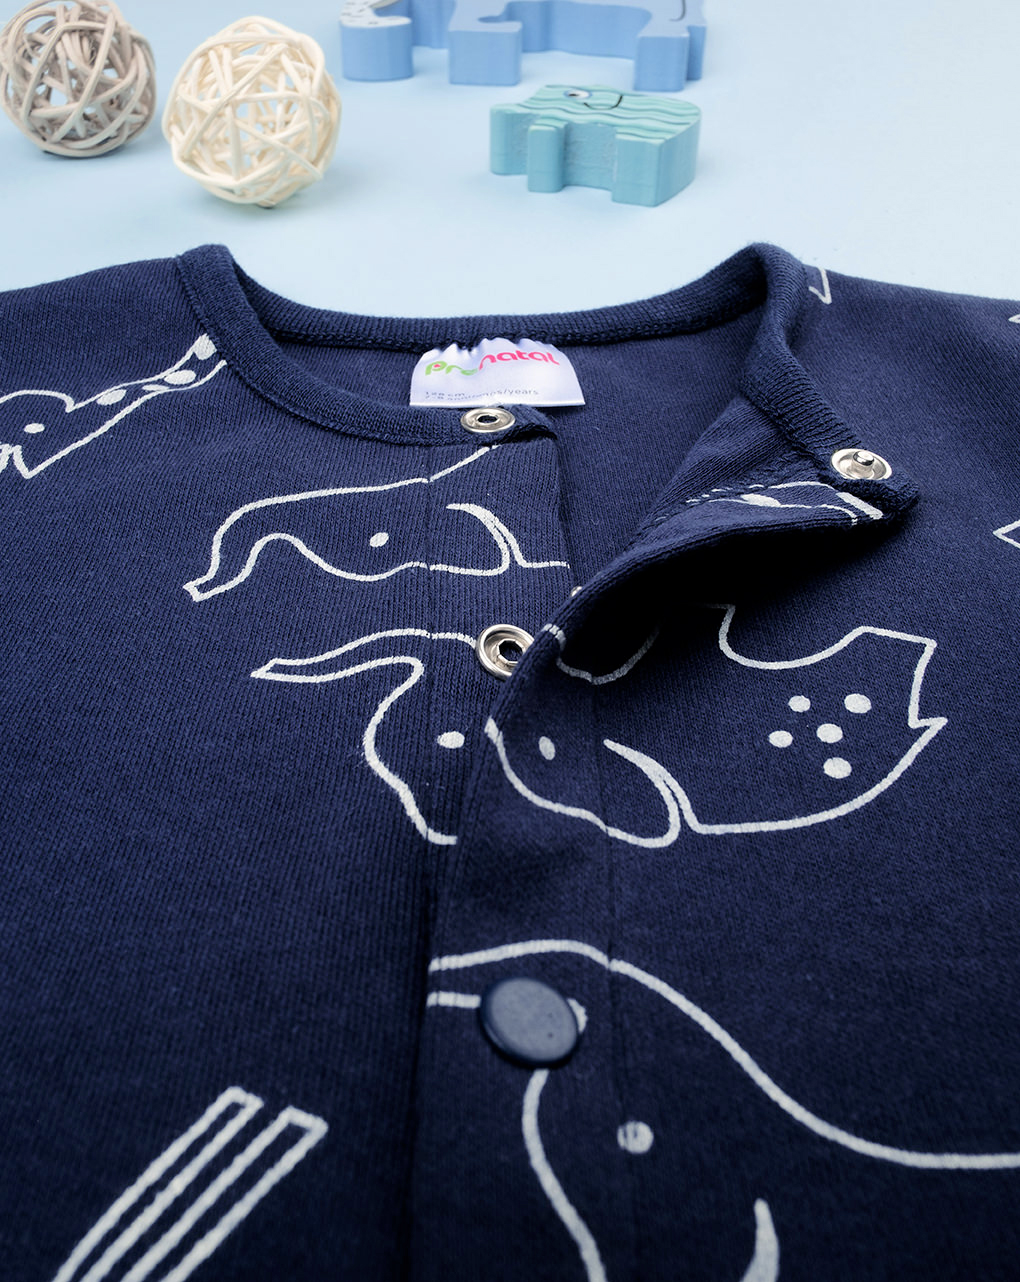 Pijama azul para bebé "animaletti - Prénatal